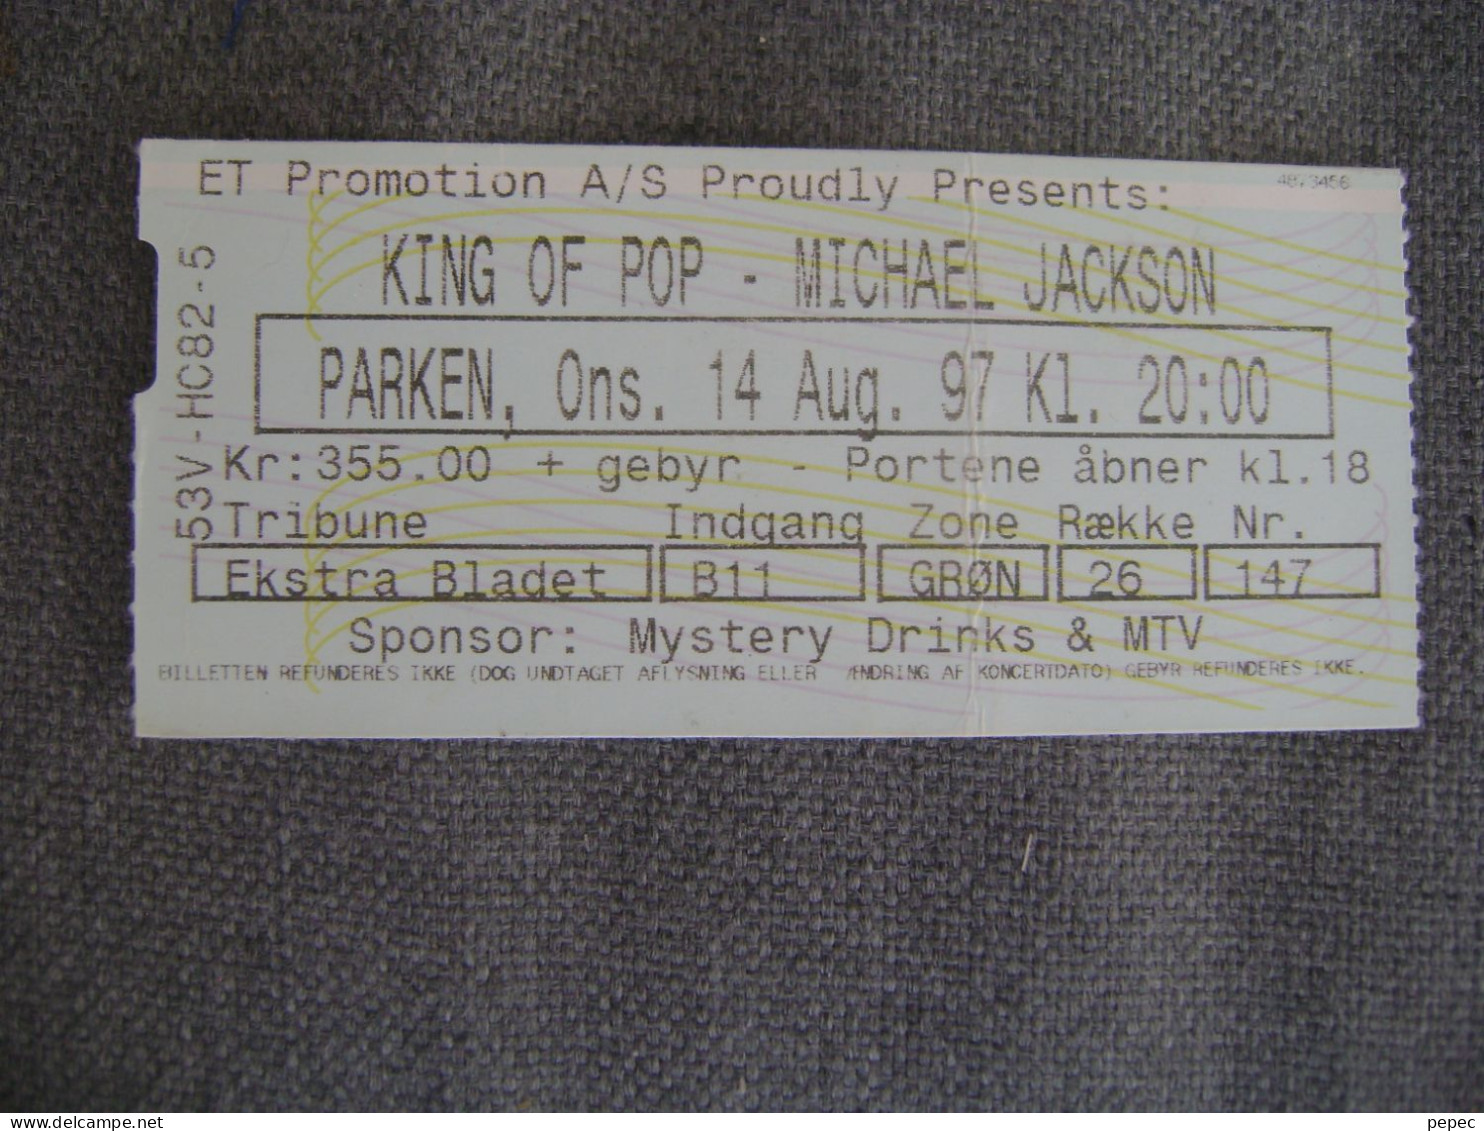 MICHAEL JACKSON  PARKEN - KOPENHAGEN  14/08/1997 - Concerttickets